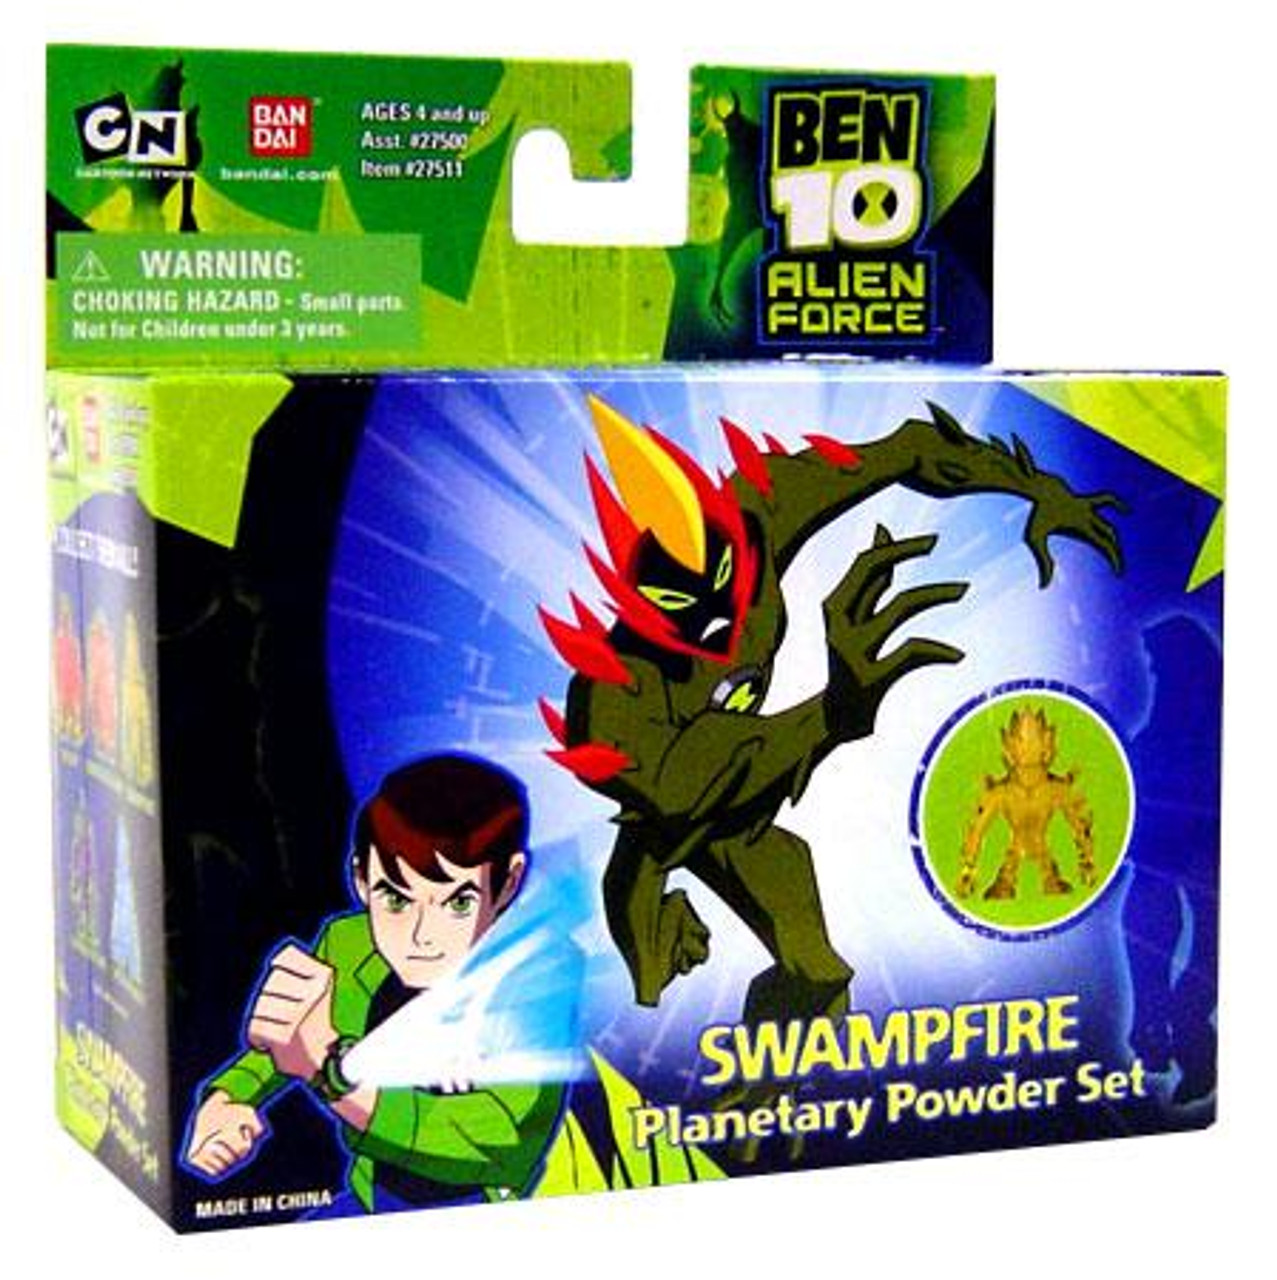 Ben 10 Alien Force Swampfire Planetary Powder Set Bandai America Toywiz - ben 10 alien force rp roblox